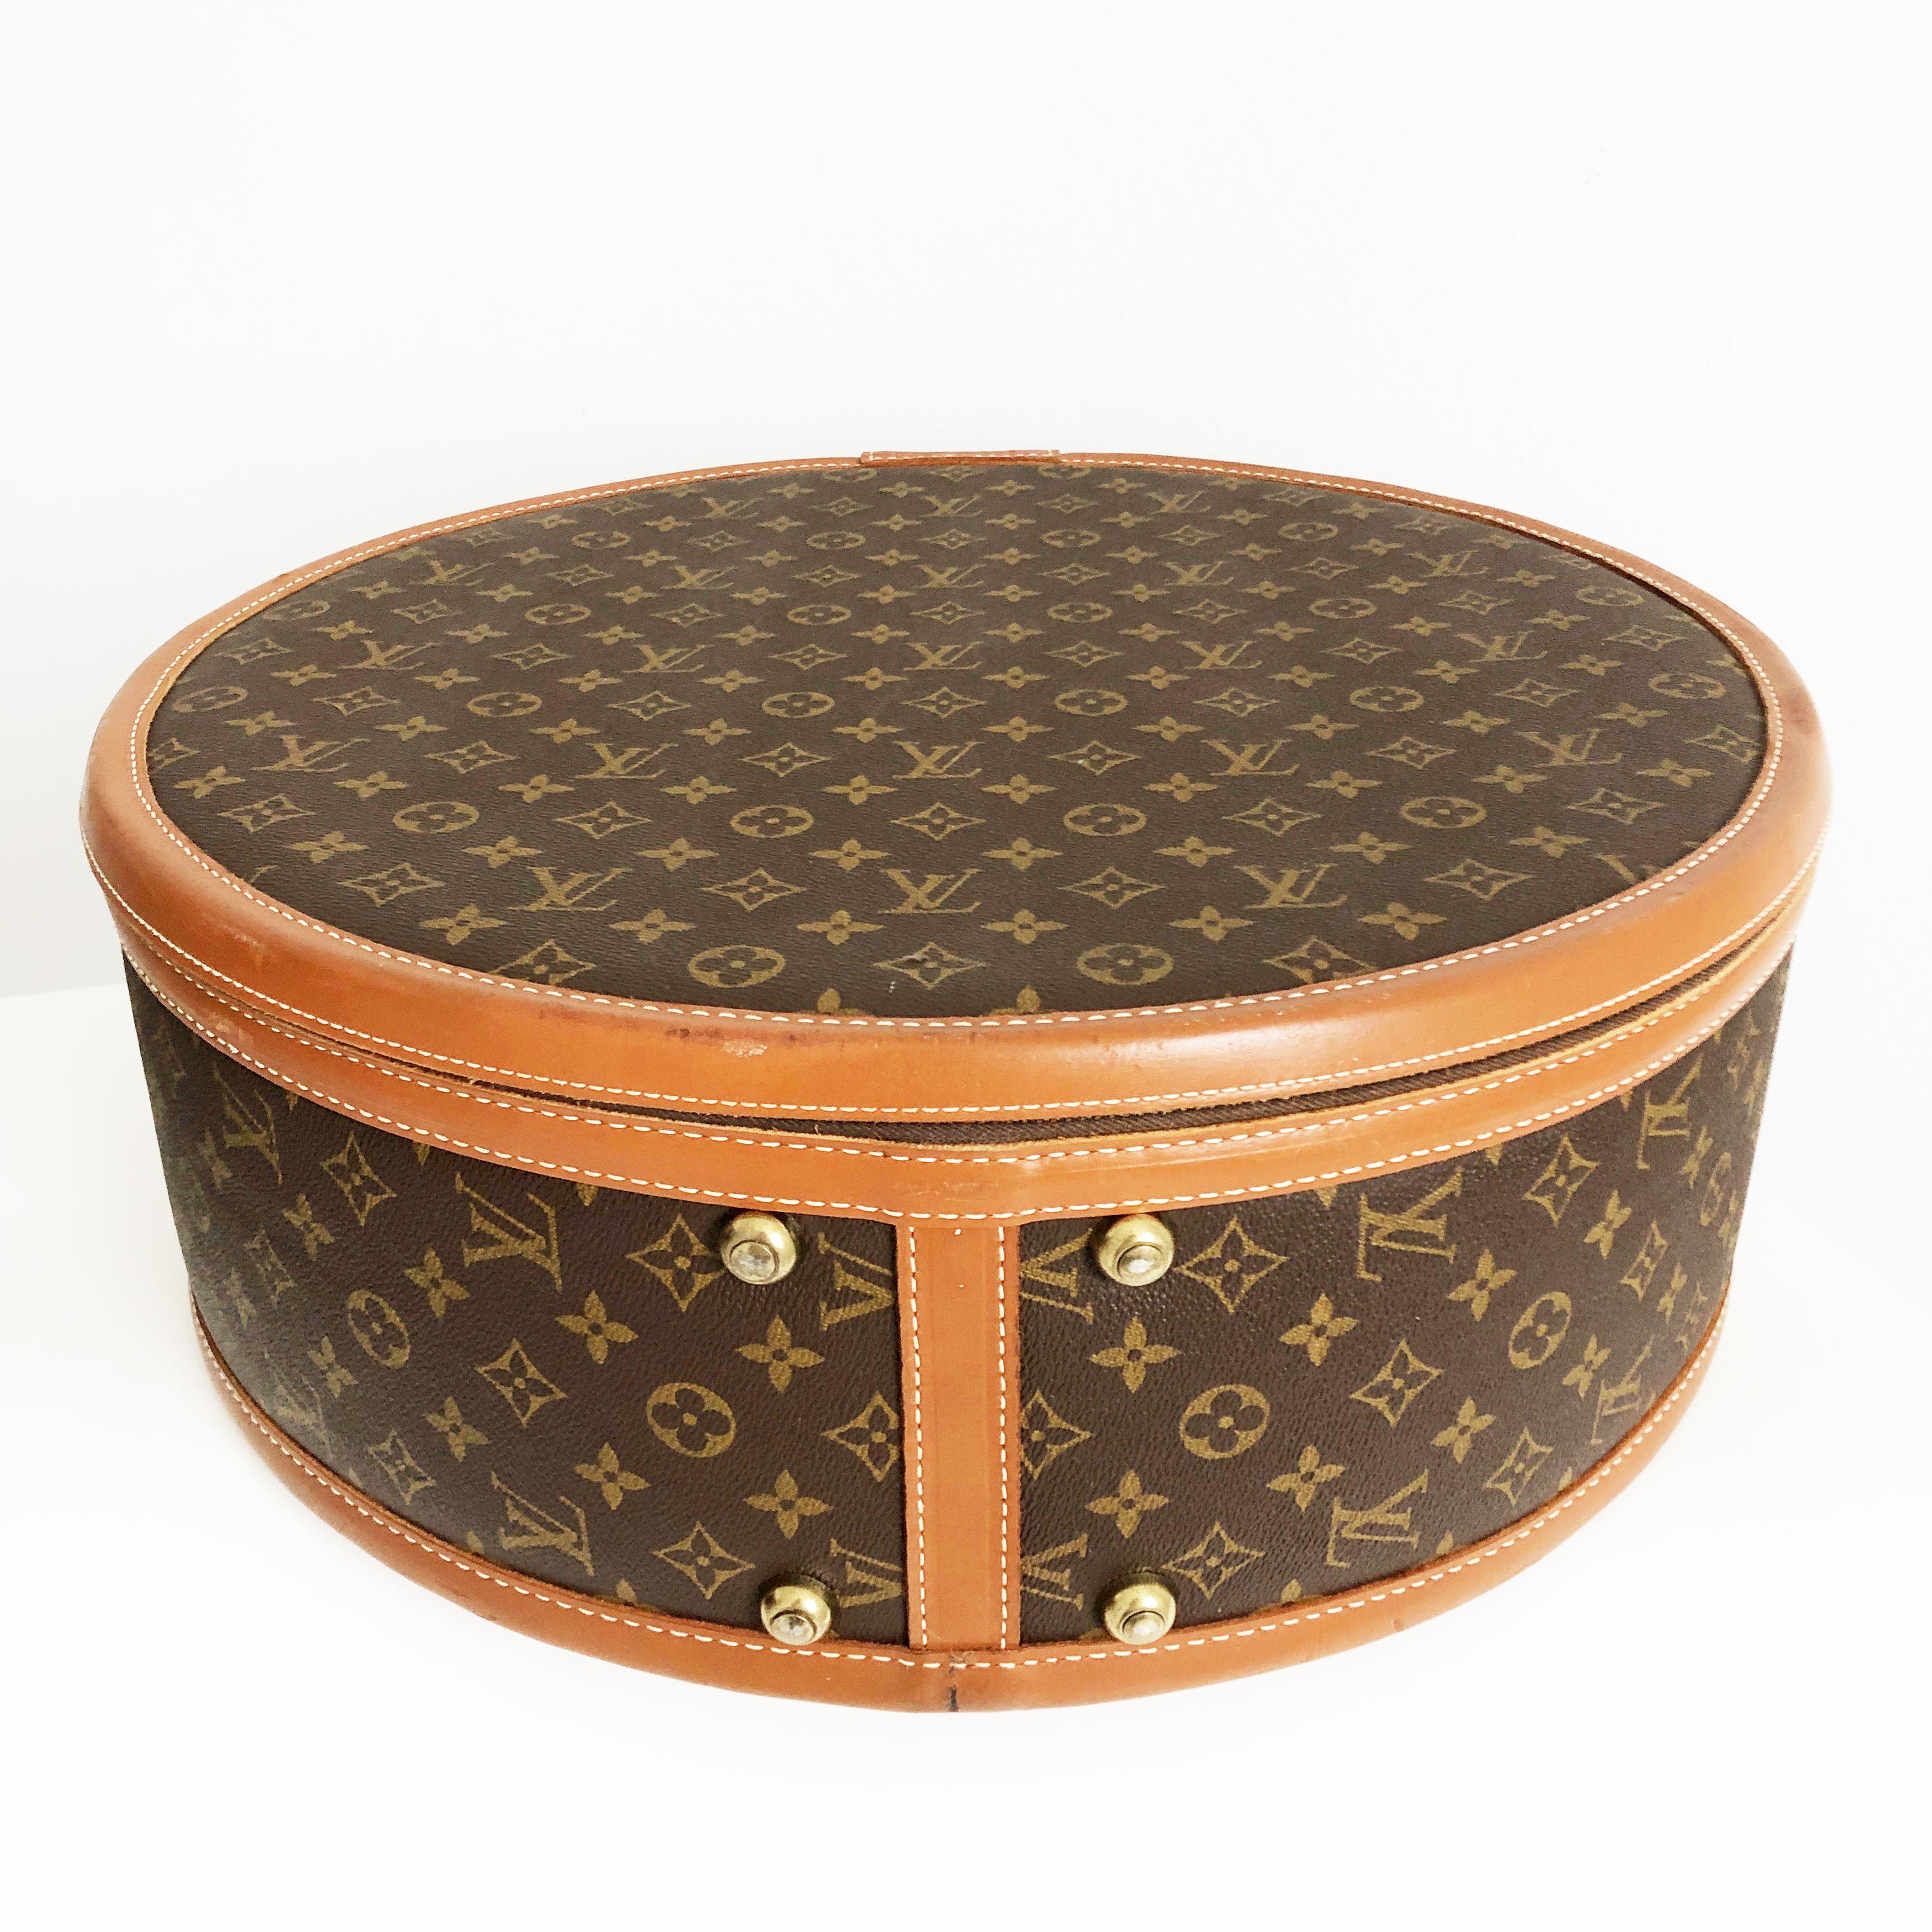 Louis Vuitton x The French Company Boite Chapeaux Round Hat Box 45cm Travel Bag 1